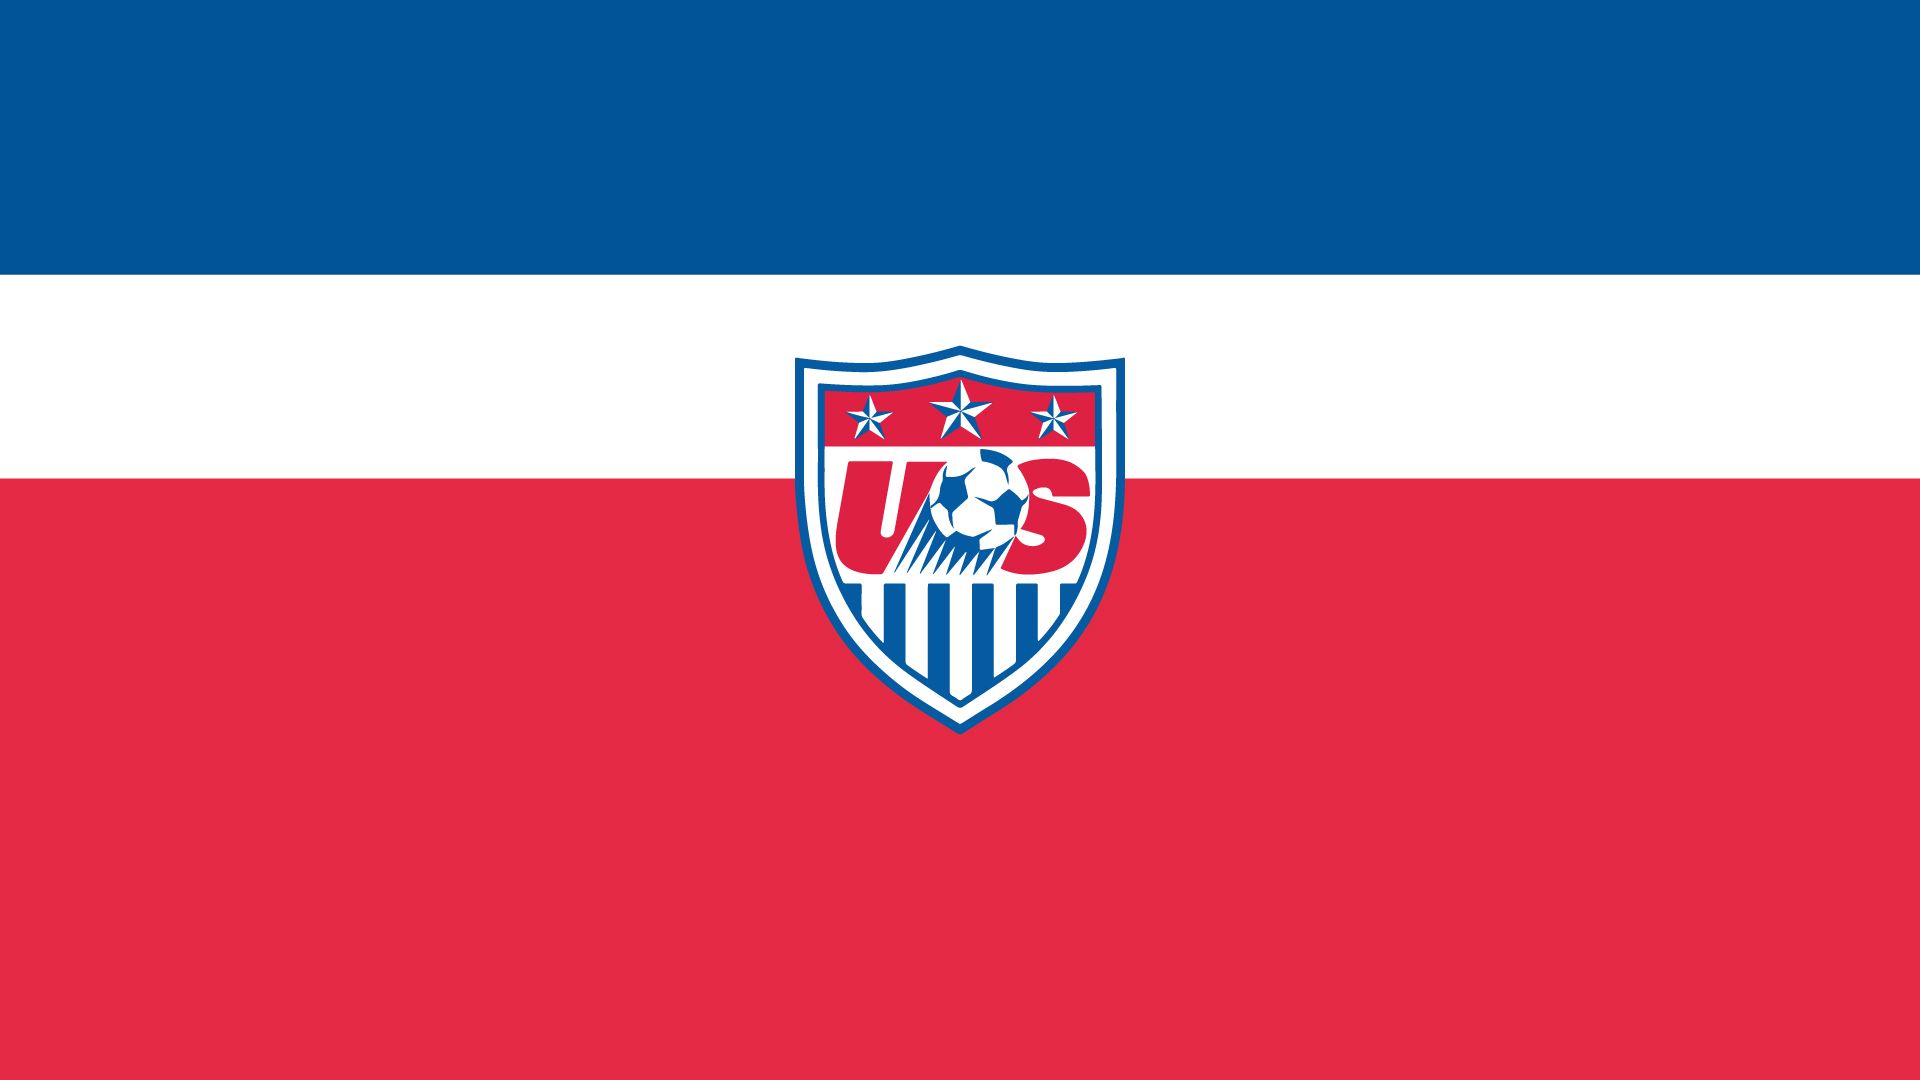  US Soccer Desktop Wallpapers Download at WallpaperBro